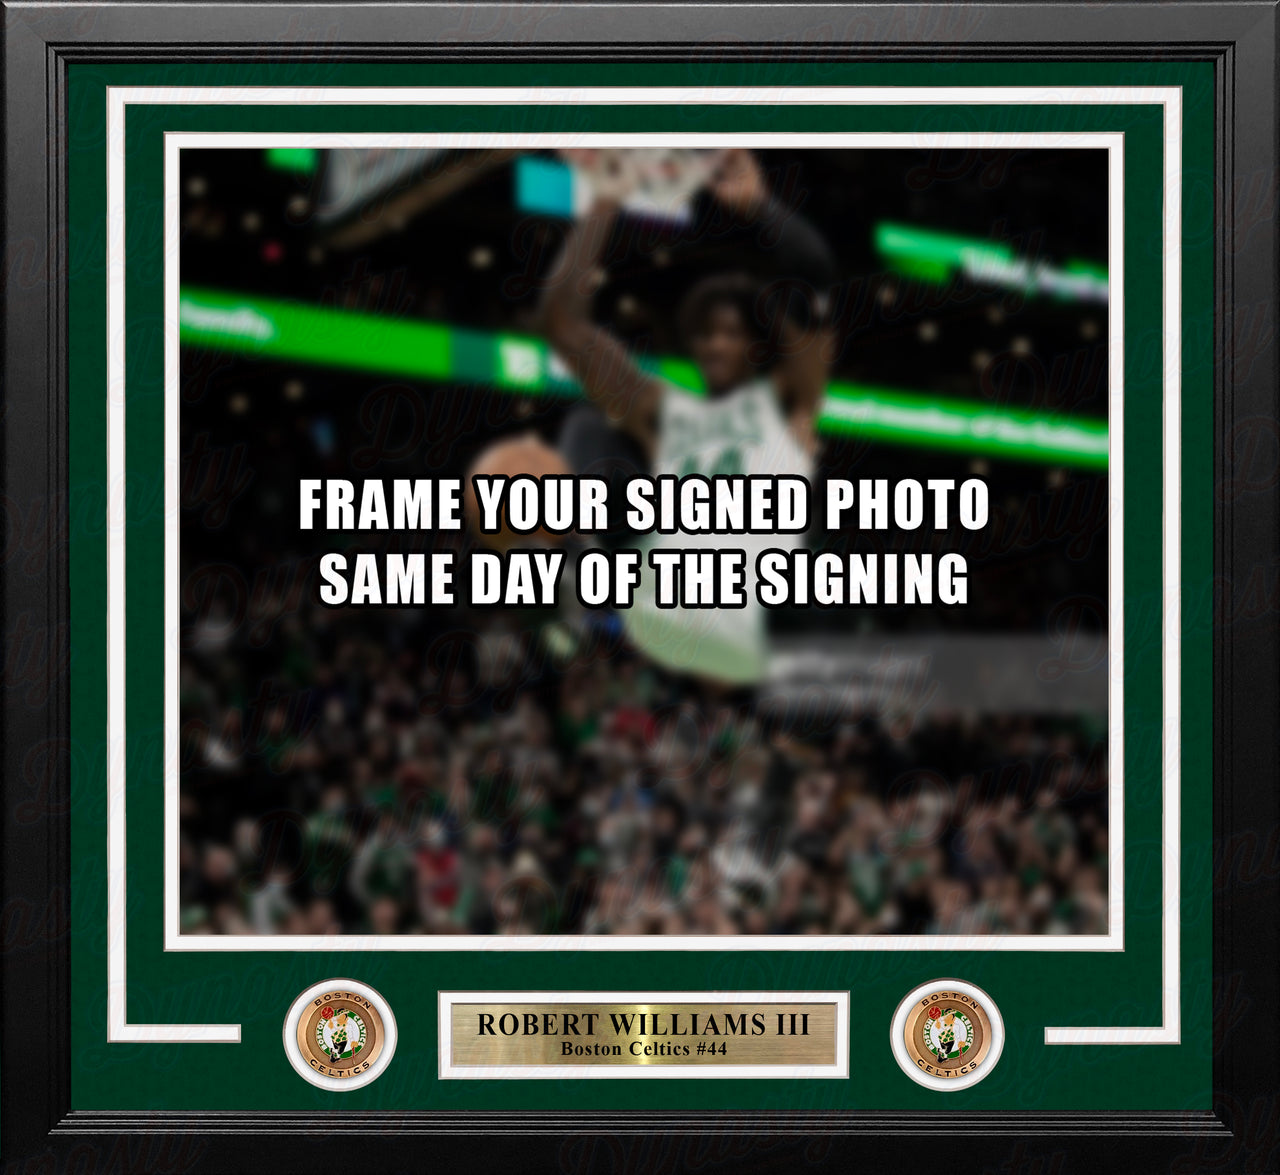 Robert Williams III Boston Celtics Photo Frame Kit - Dynasty Sports & Framing 